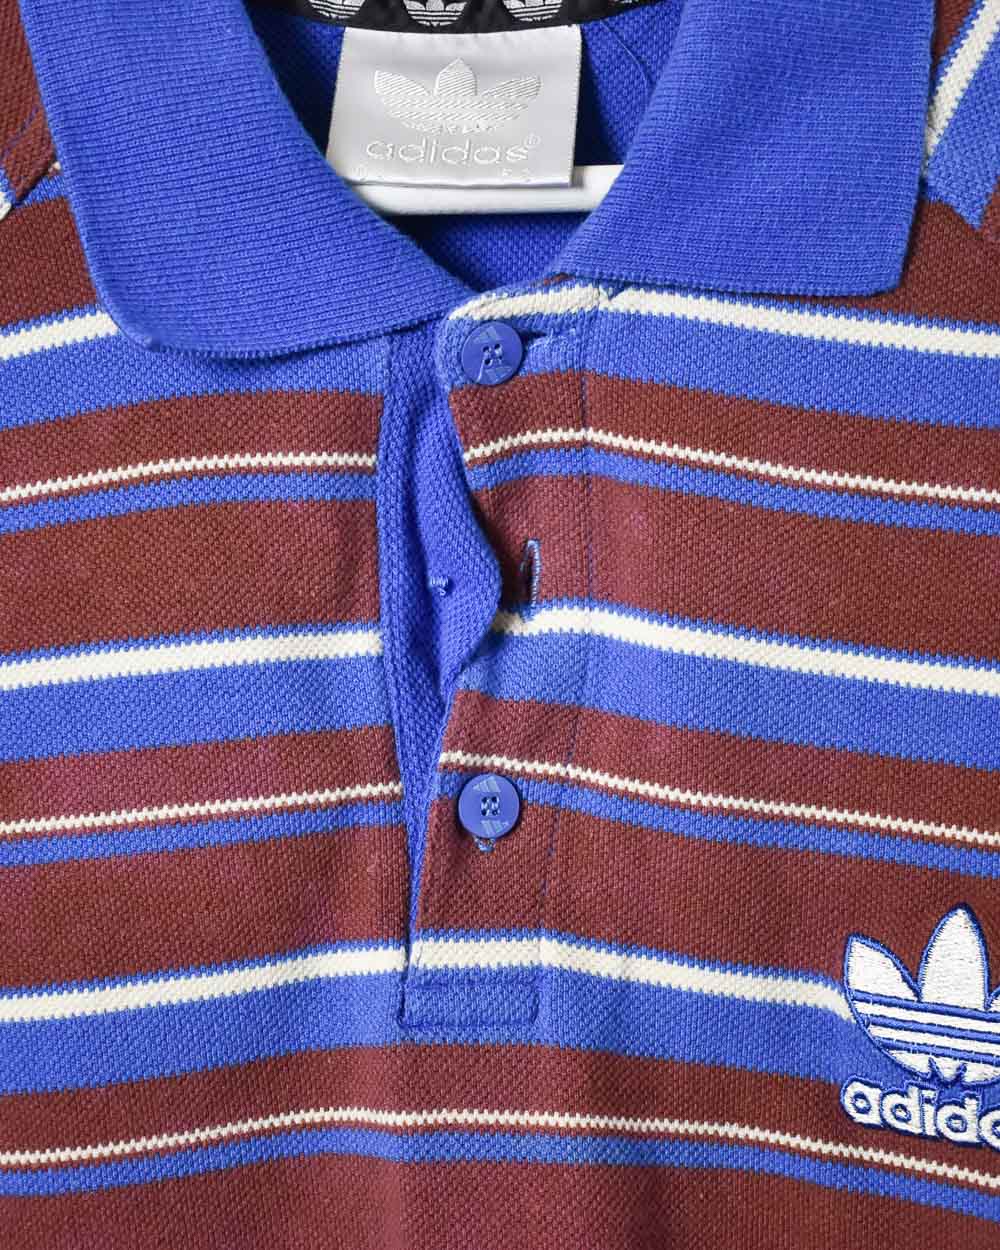 Blue Adidas Striped Polo Shirt - Small